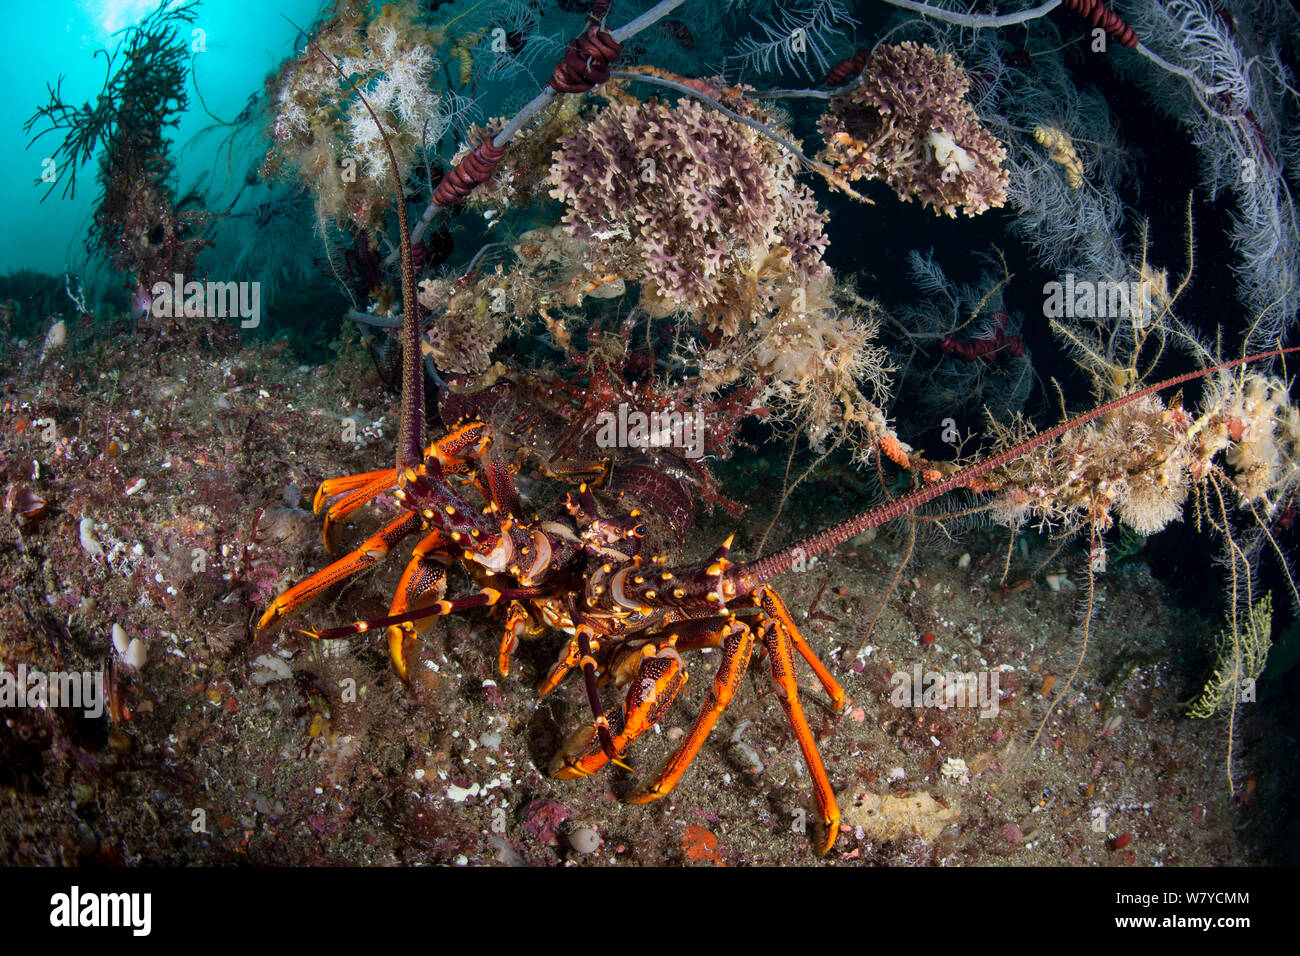 Neuseeland Krebse oder Southern Rock Lobster (Jasus edwardsii) versteckt sich unter einem Fiordland Black Coral Tree (Antipathella fiordensis) in den Dusky Sound, Fiordland National Park, Neuseeland. April 2014. Stockfoto